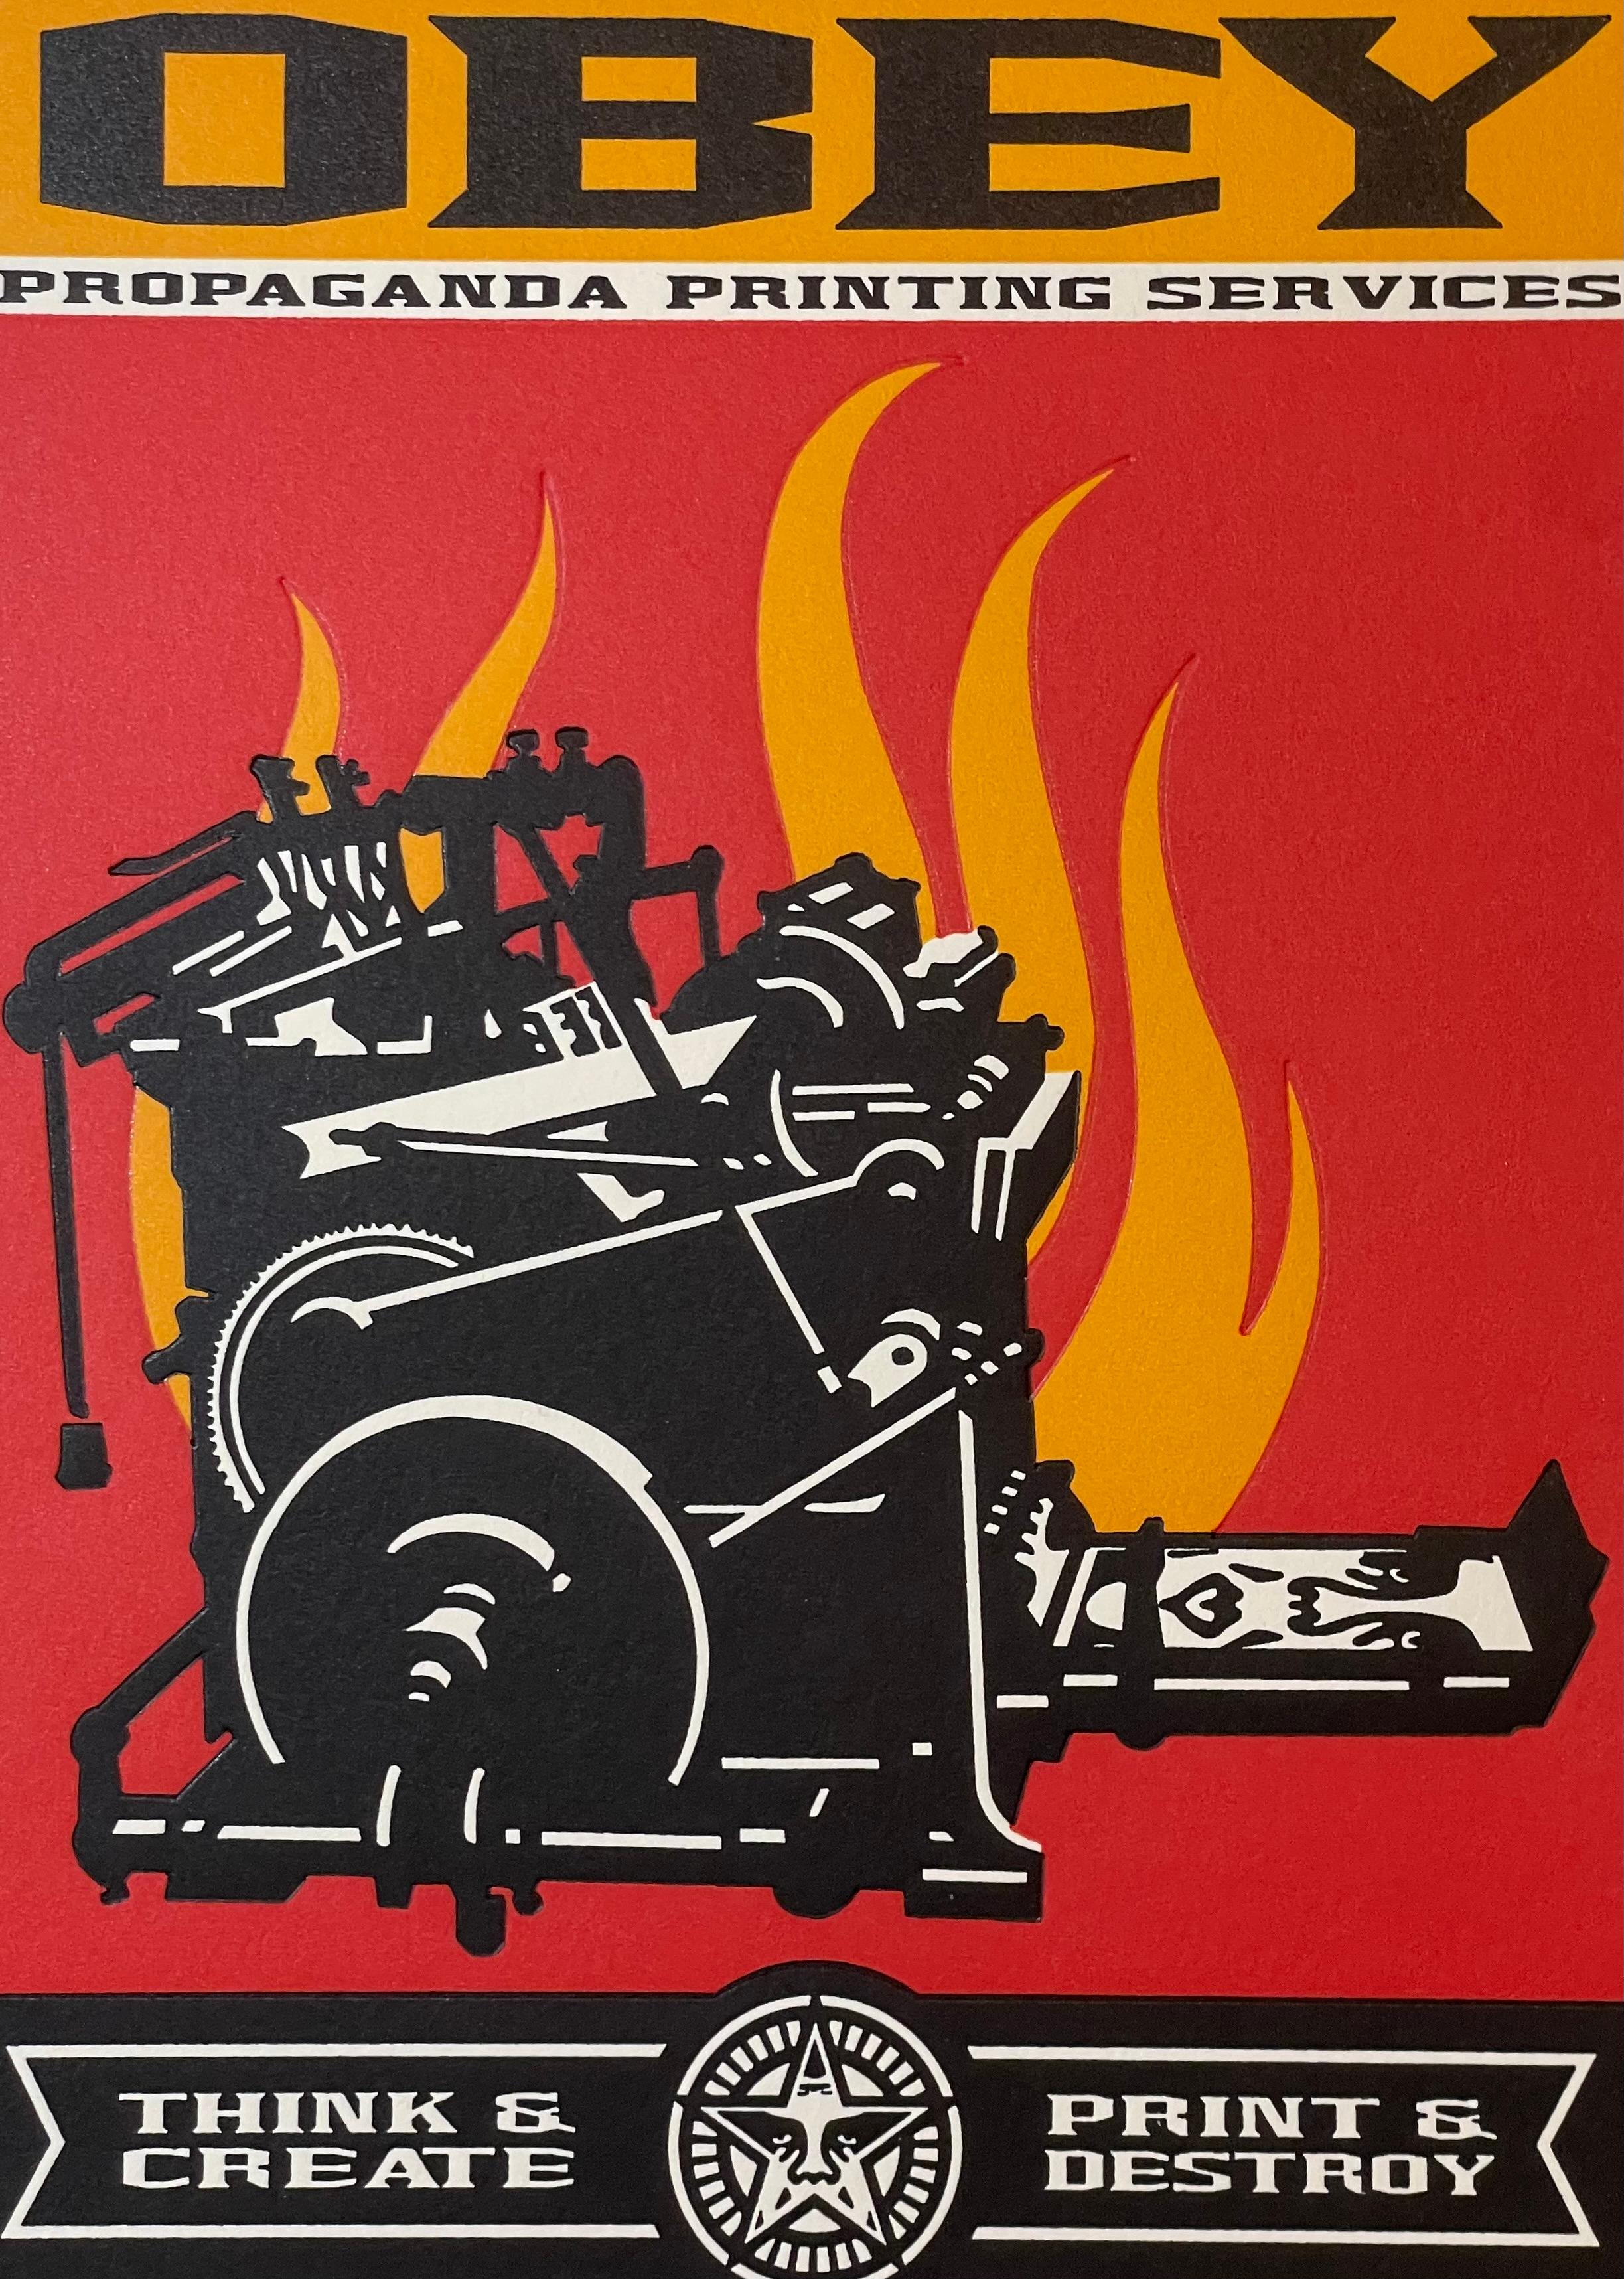 Shepard Fairey Print & Destroy Letterpress Print Contemporary Street Art, 2015 For Sale 2